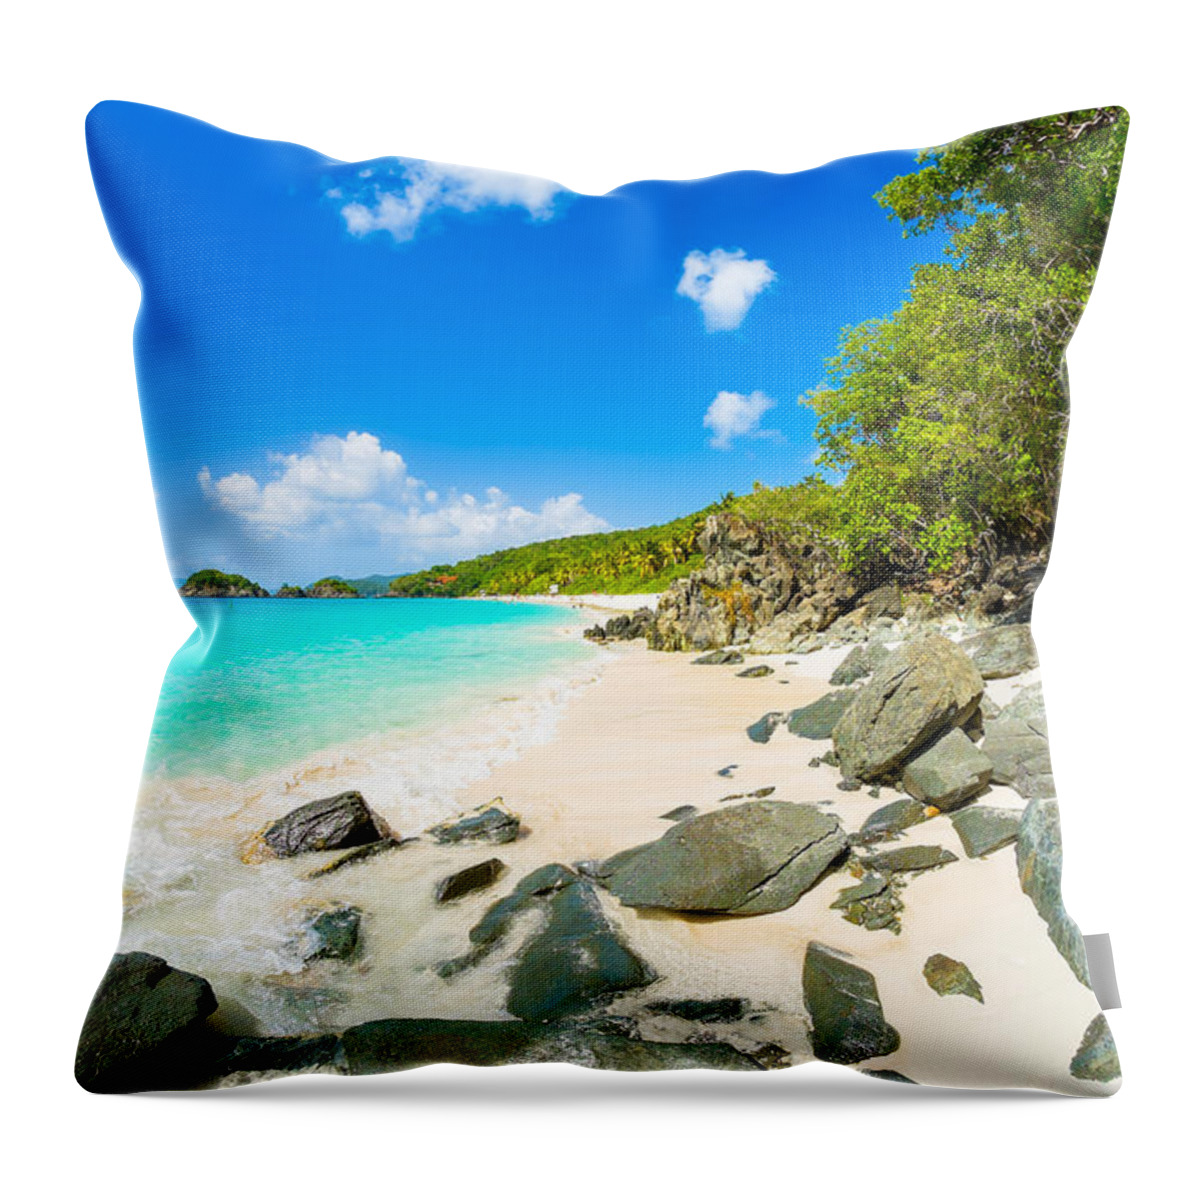 Caribbean Throw Pillow featuring the photograph Beautiful Caribbean beach by Raul Rodriguez